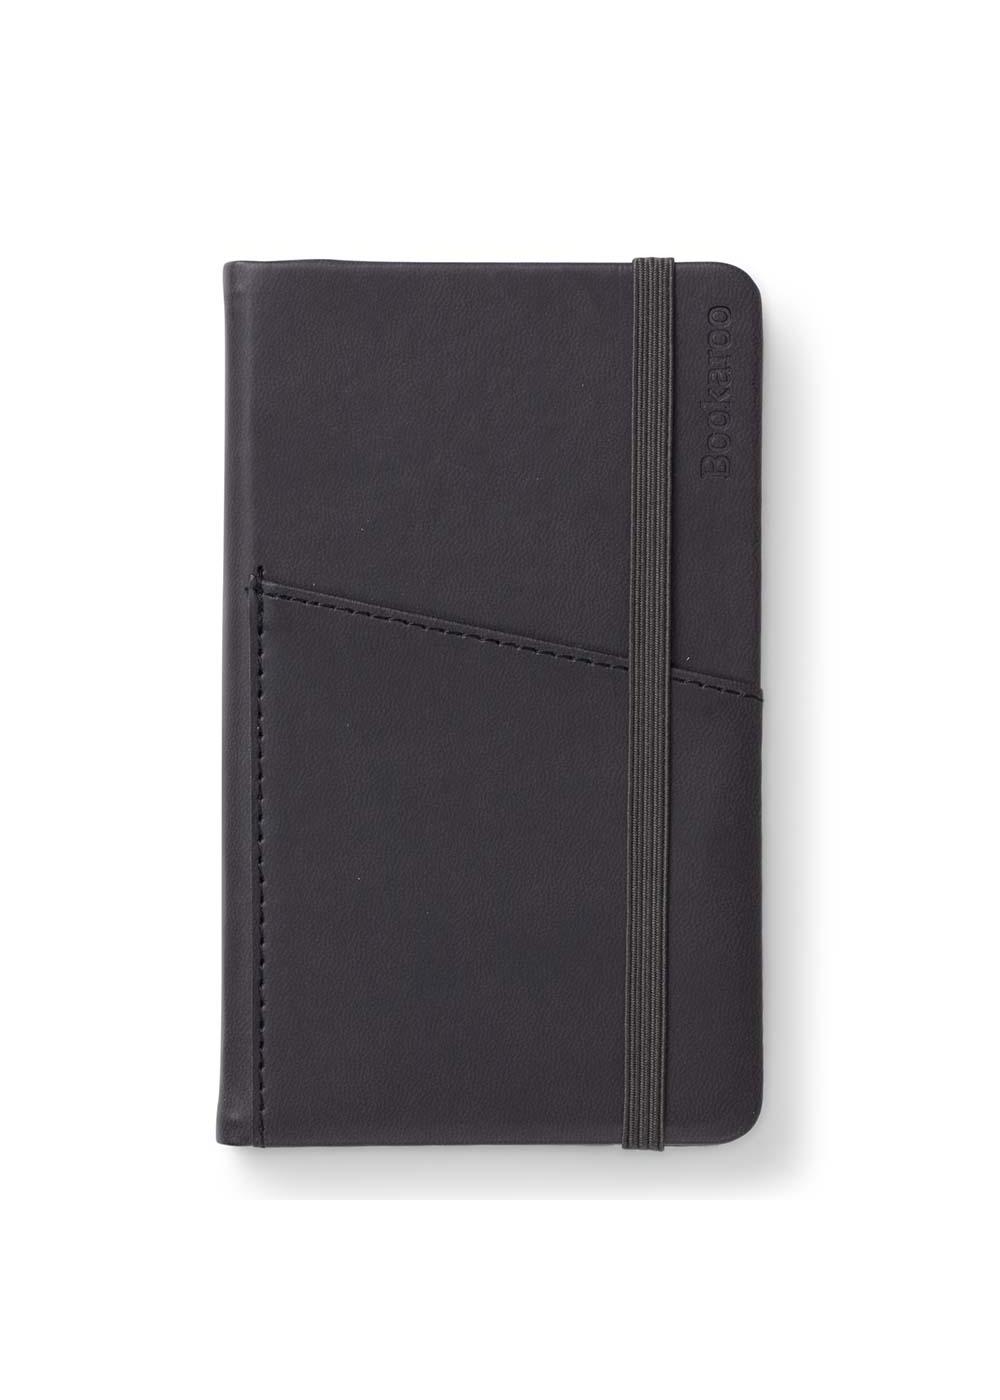 Bookaroo Small Pocket Notebook - Black; image 2 of 2